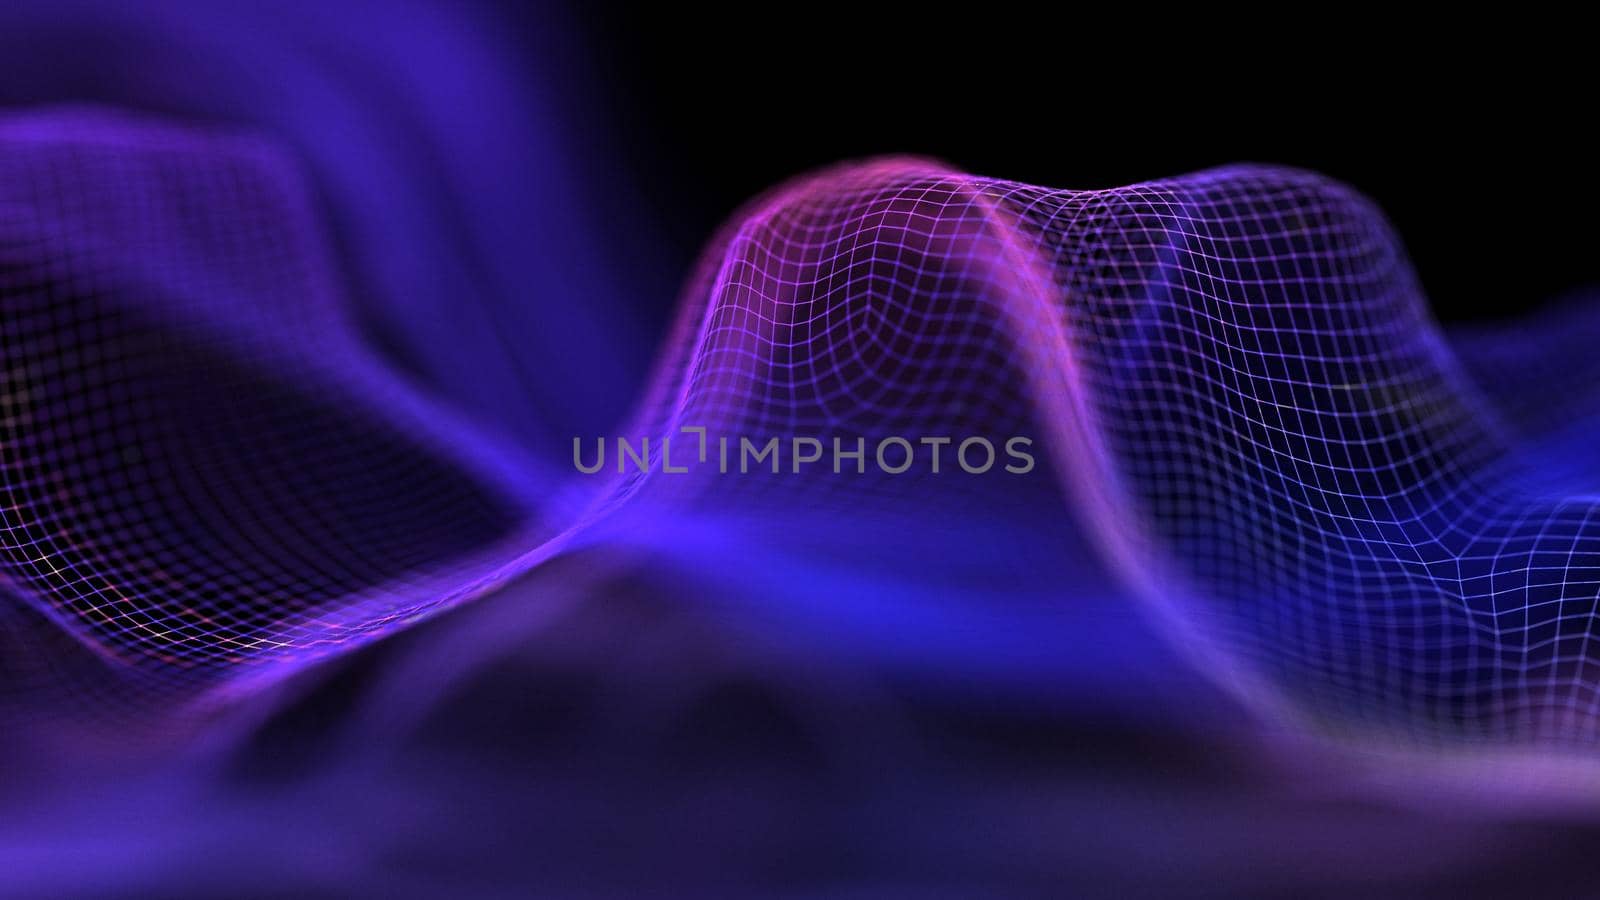 Tech background purple. Network purple technology backdrop. Big data neon background perspective. Cyber technical wave sound. 3d render.